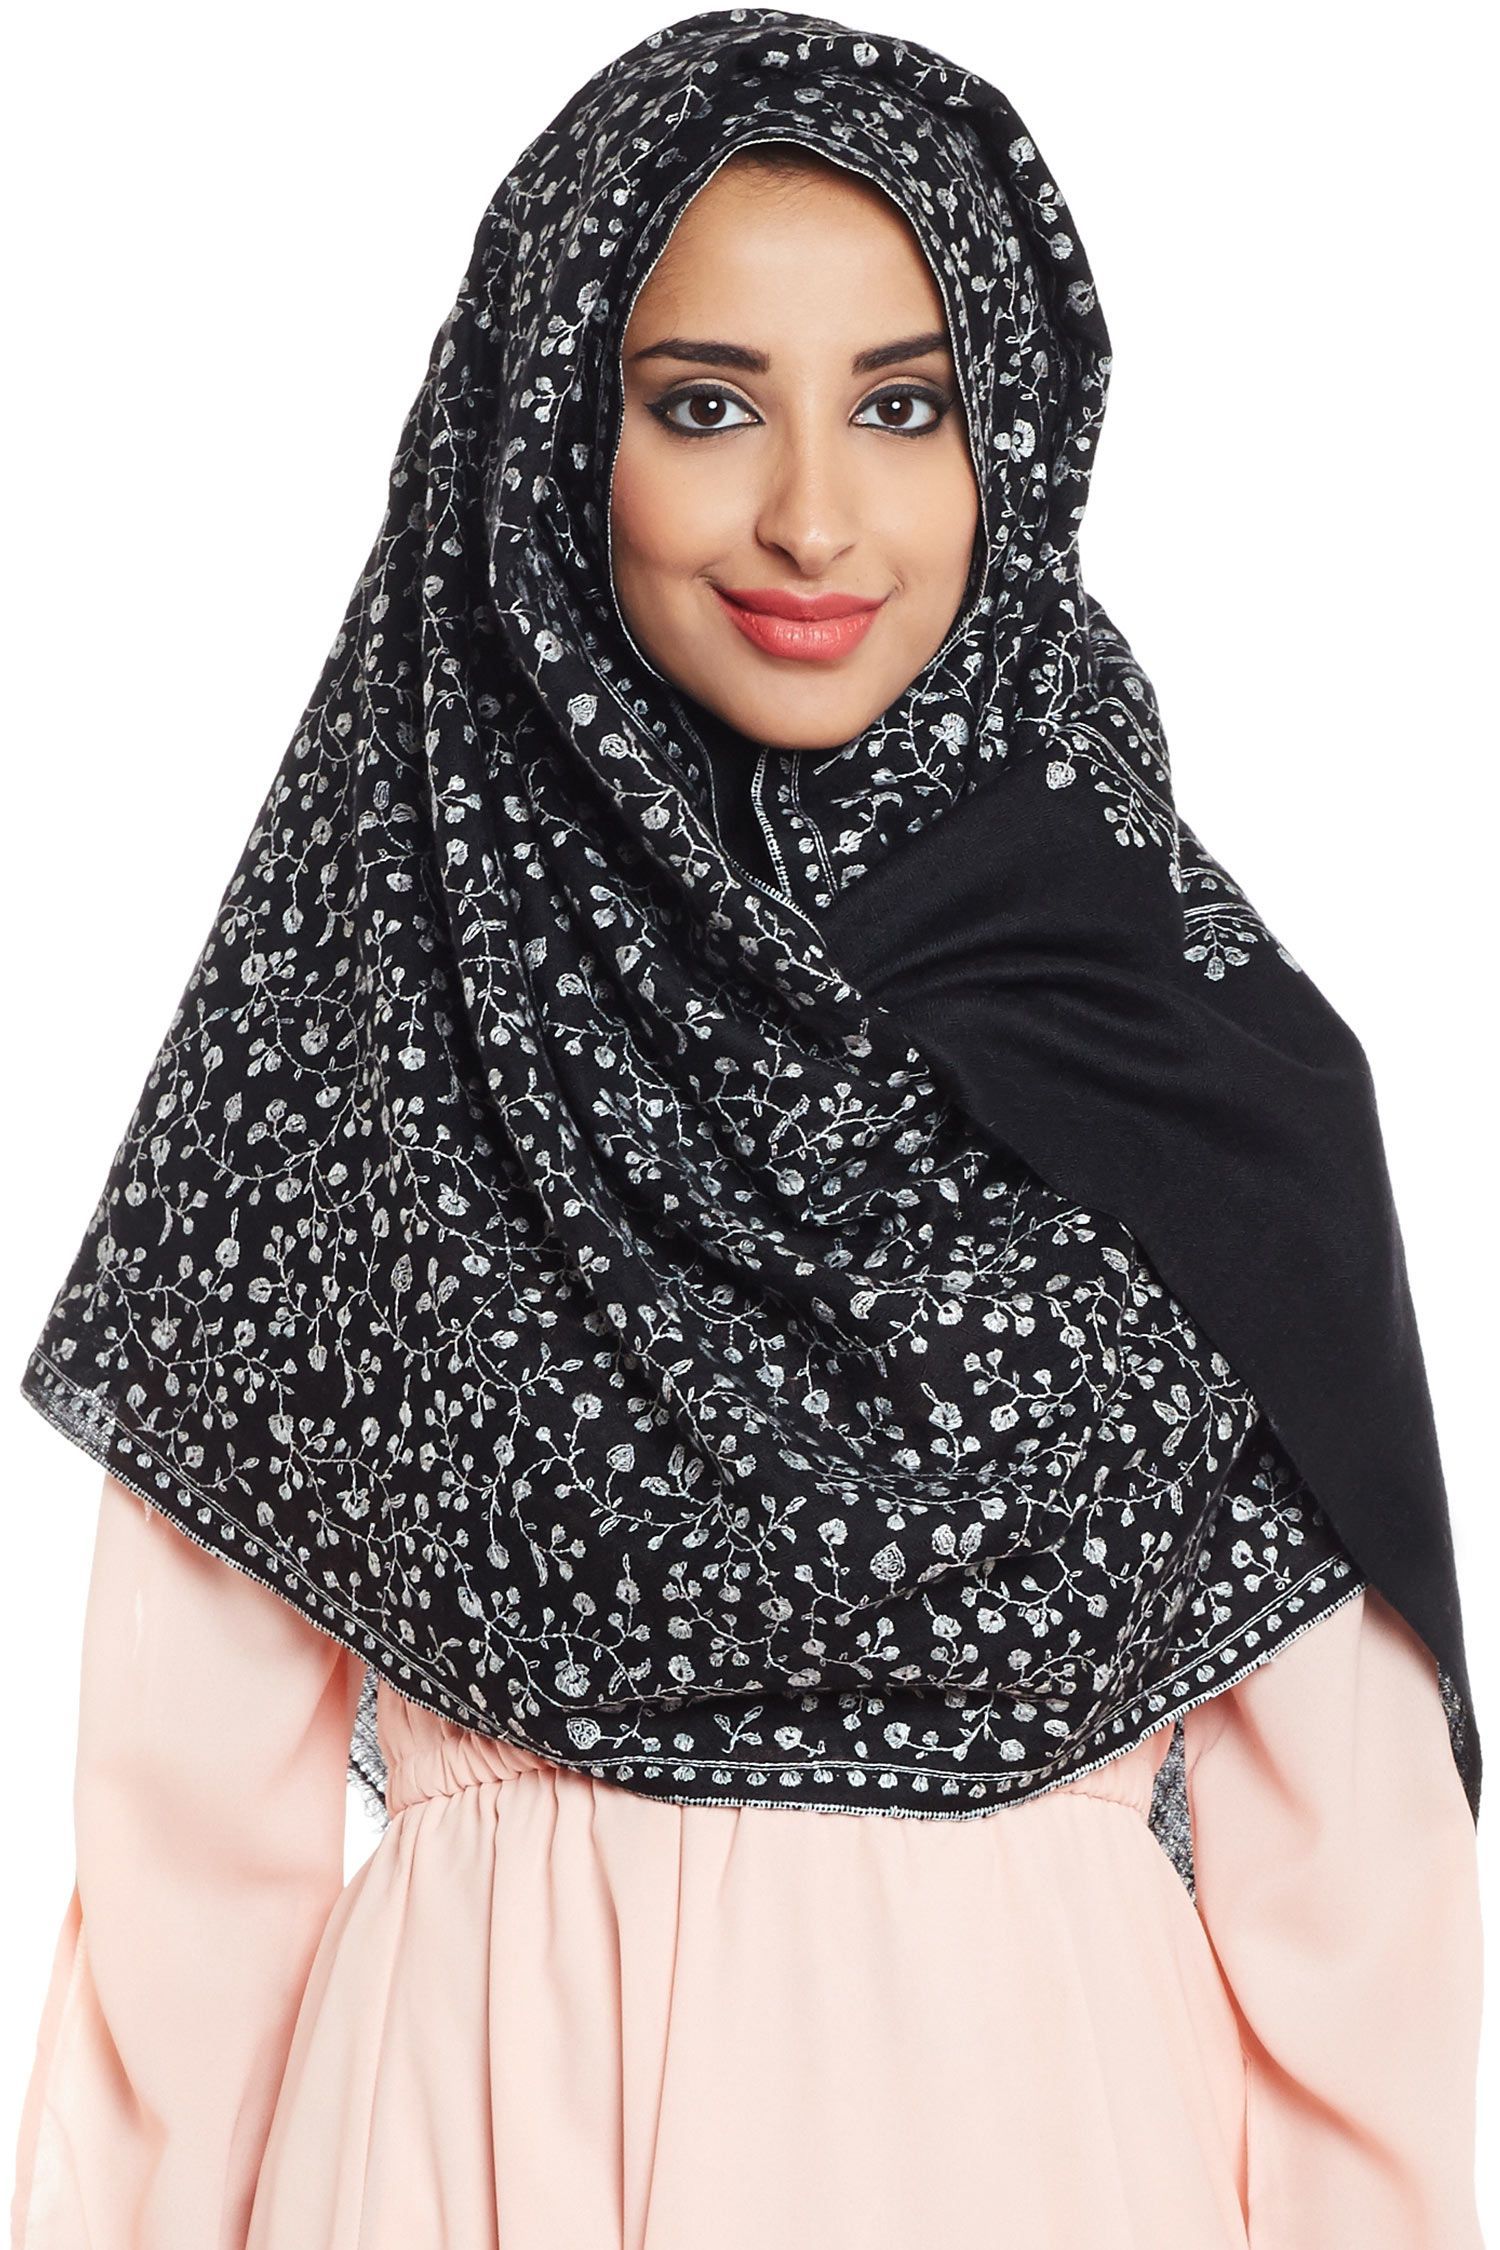 The Black Monochromatica Hijab